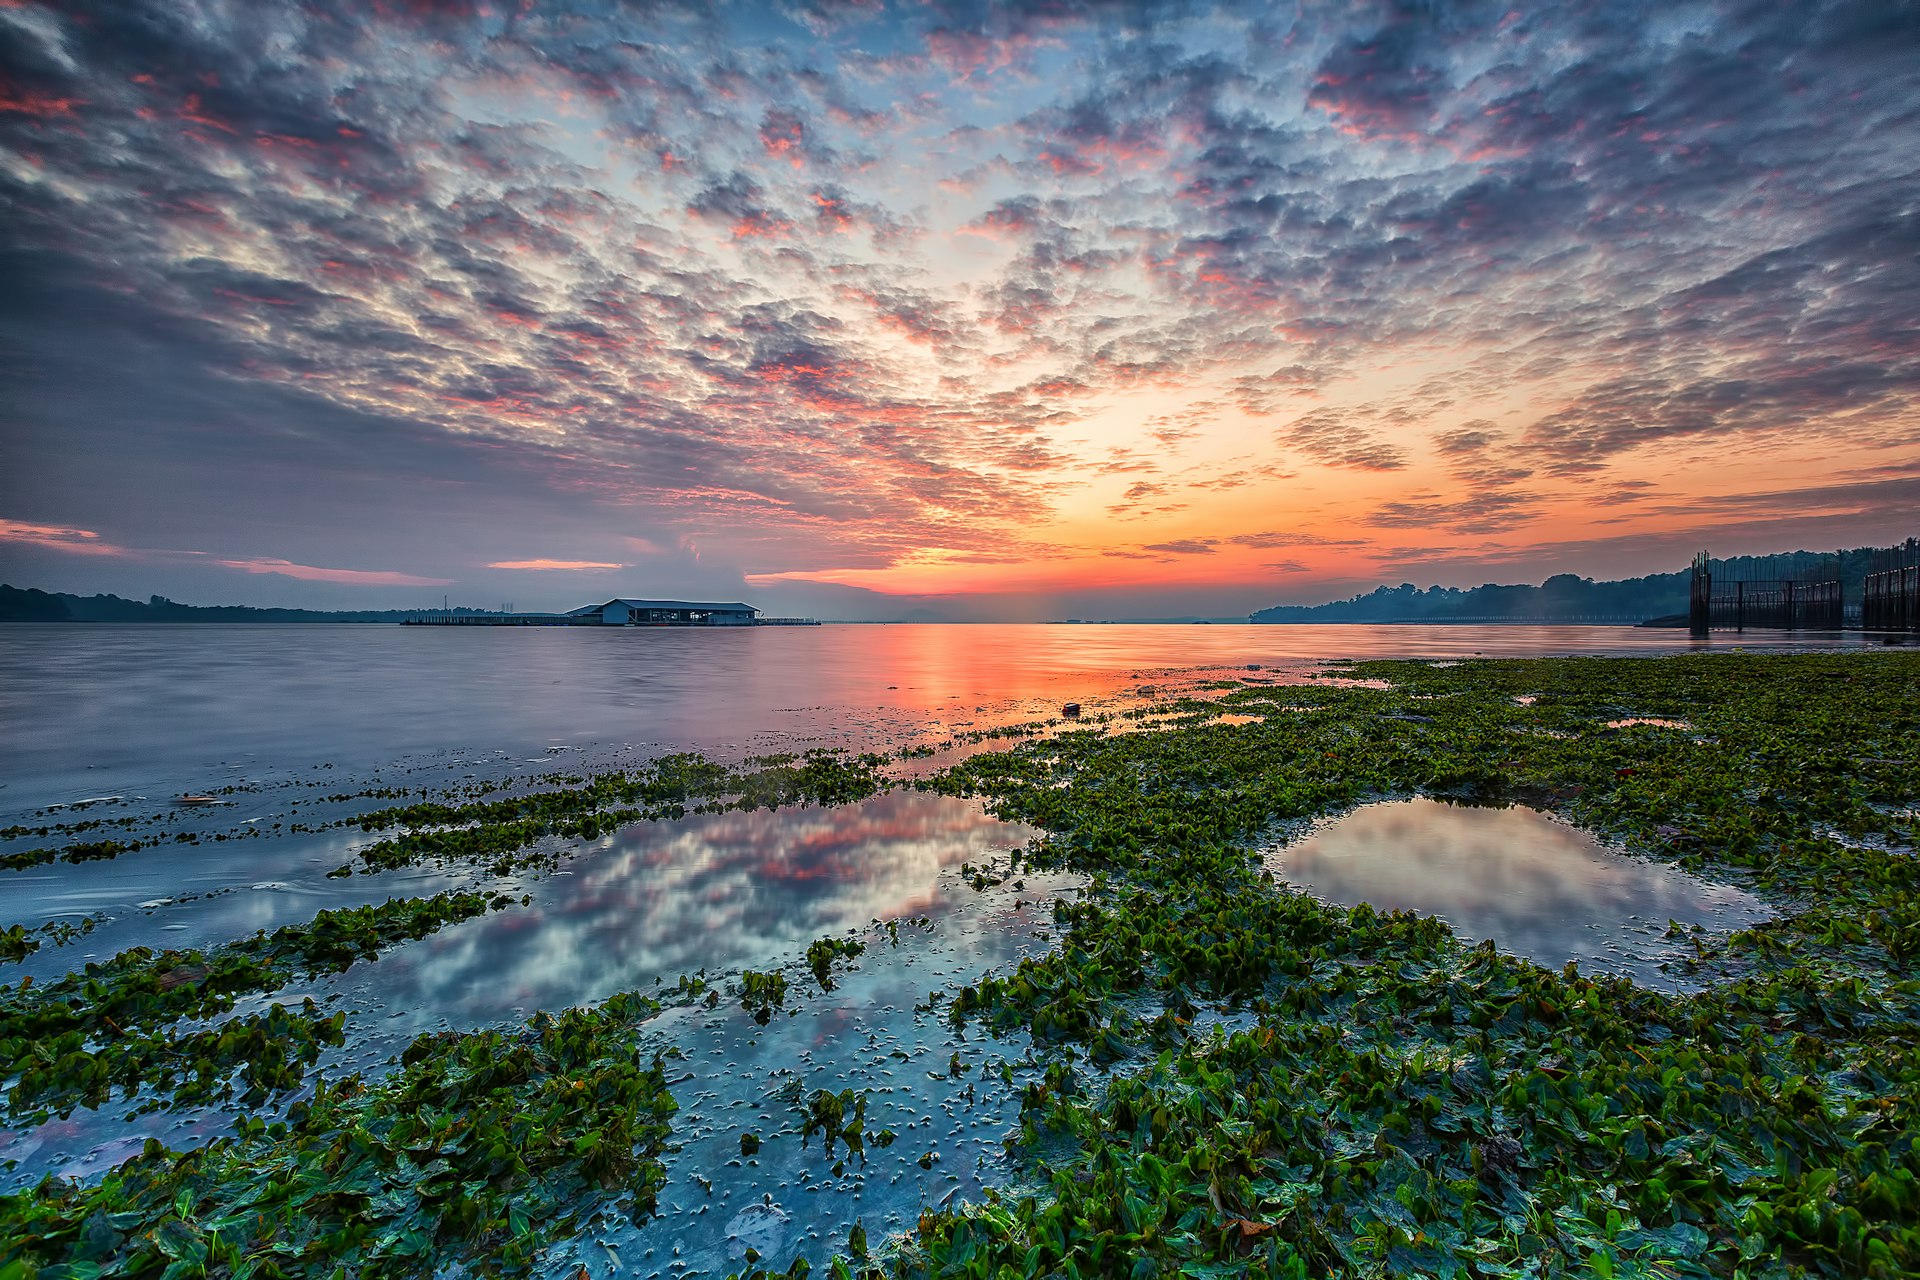 Sunrise colors and clouds formation on Pulau Ubin